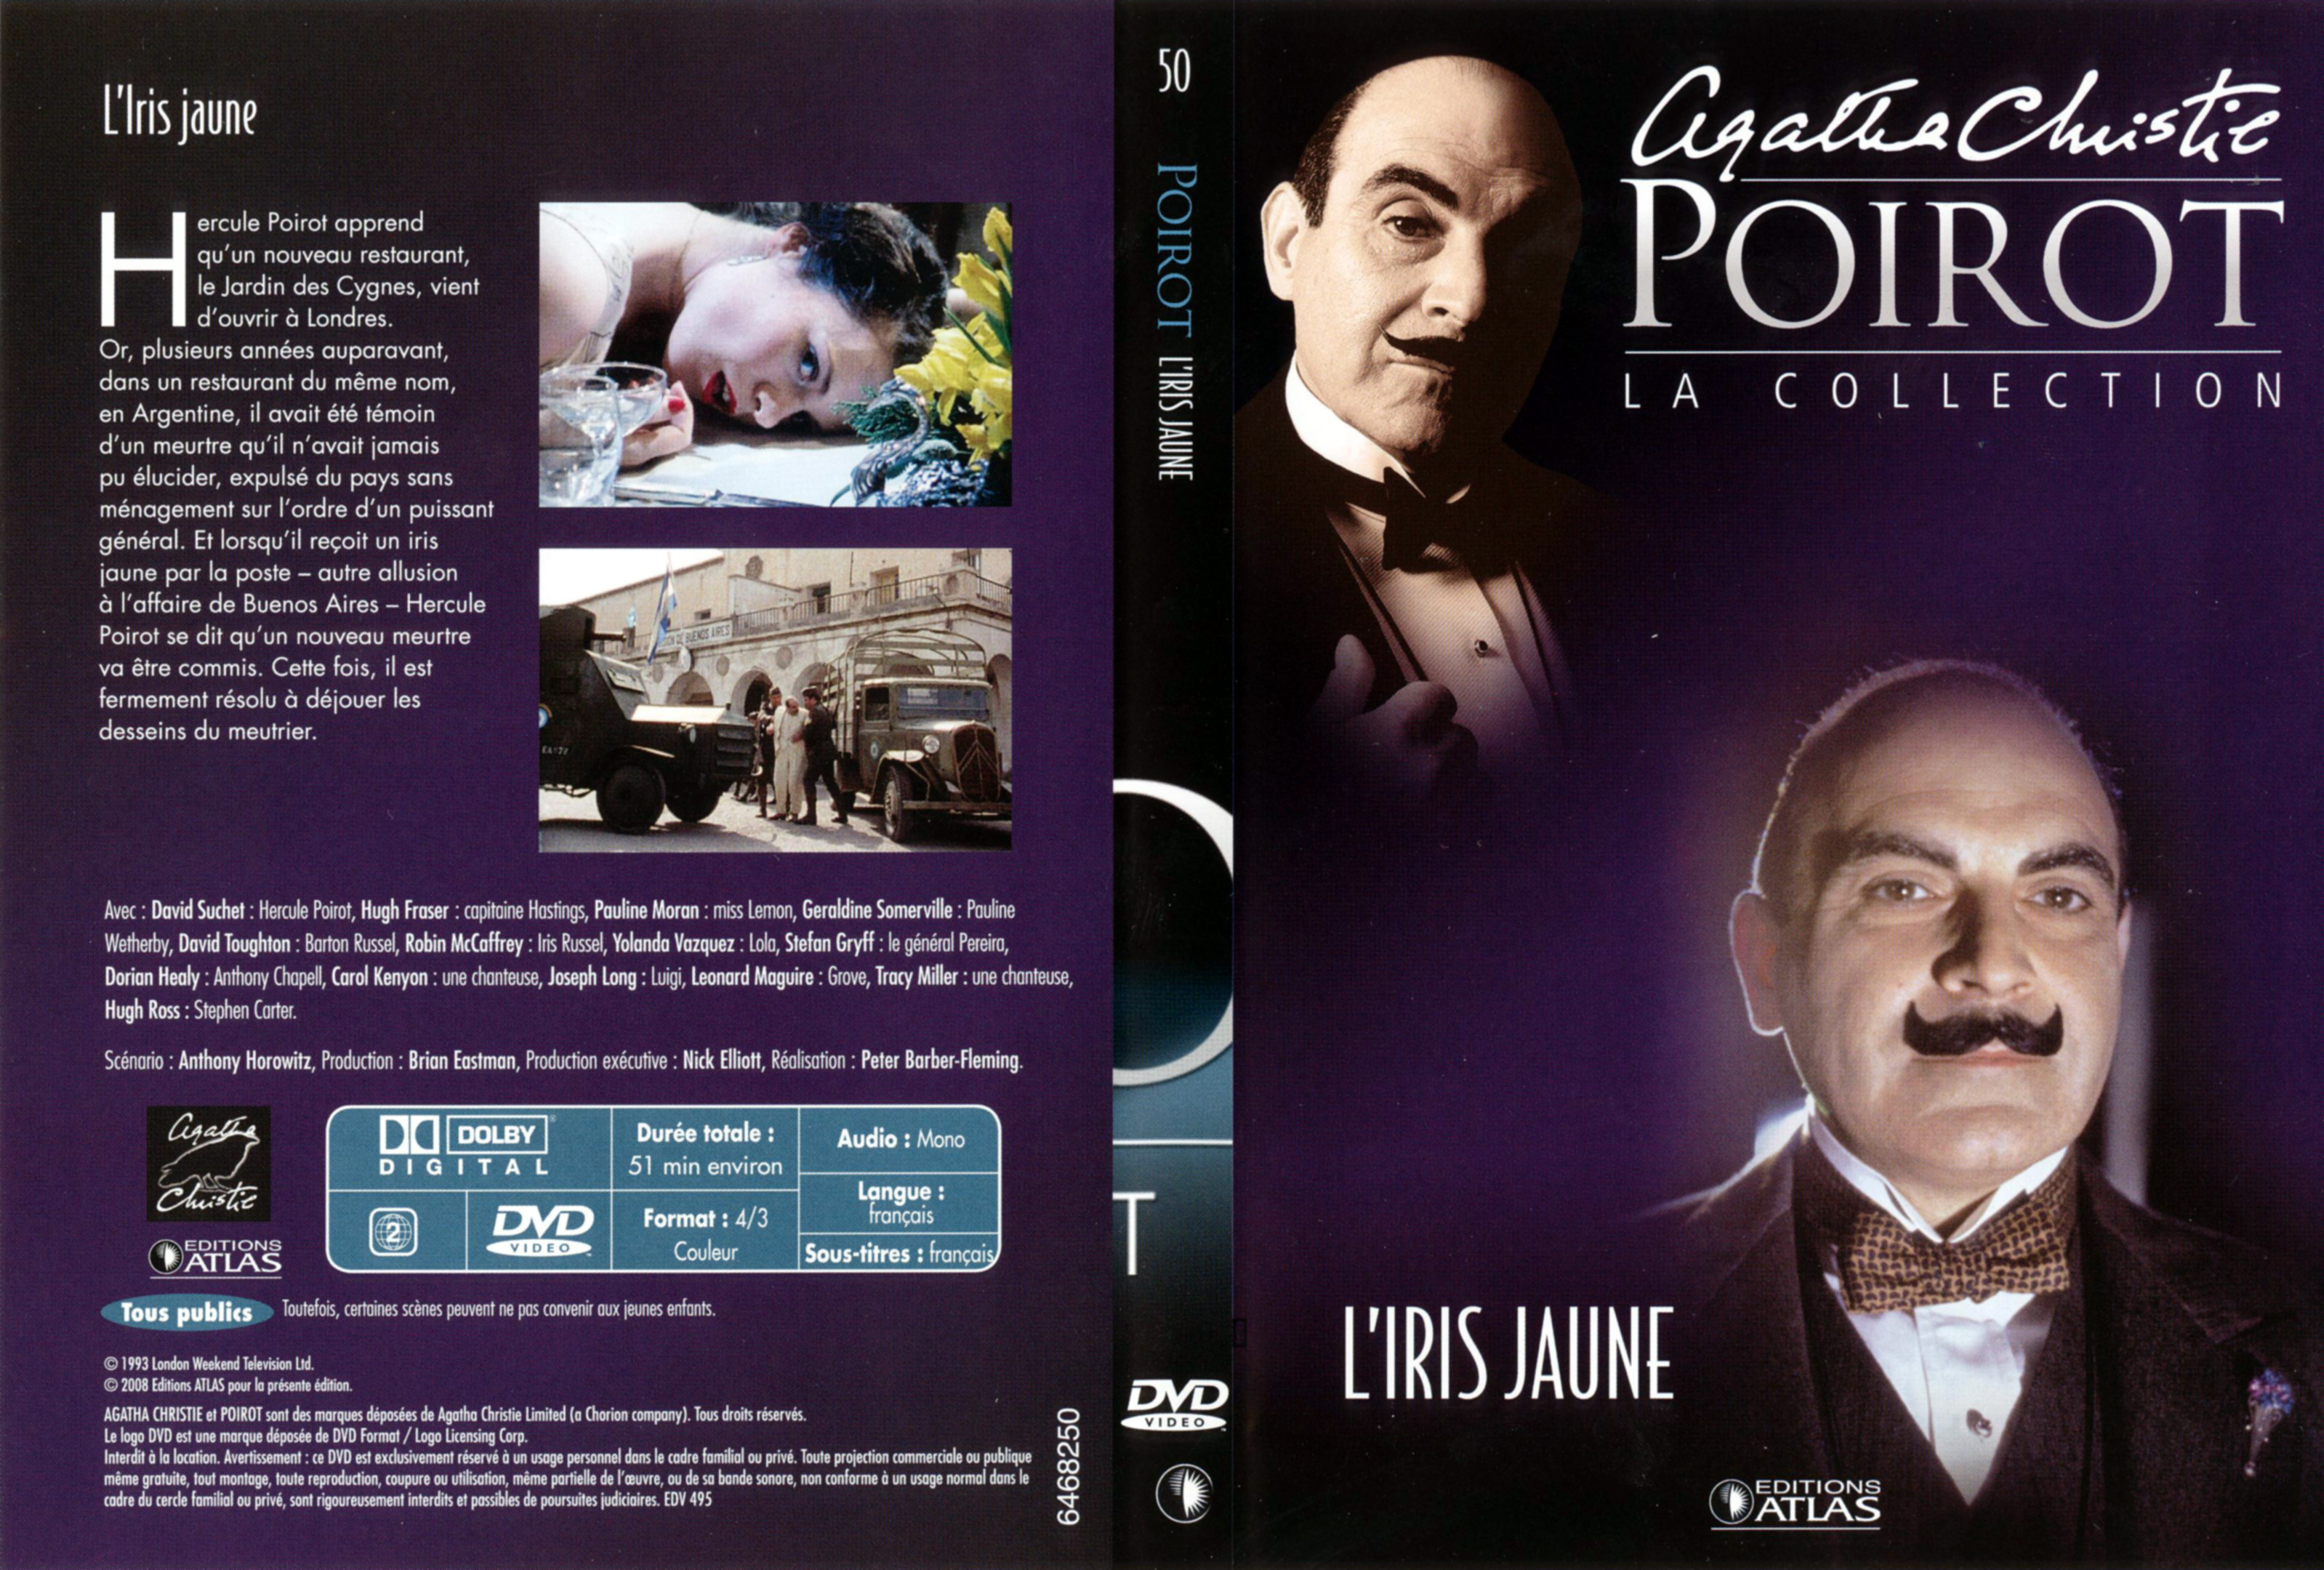 Jaquette DVD Hercule Poirot vol 50